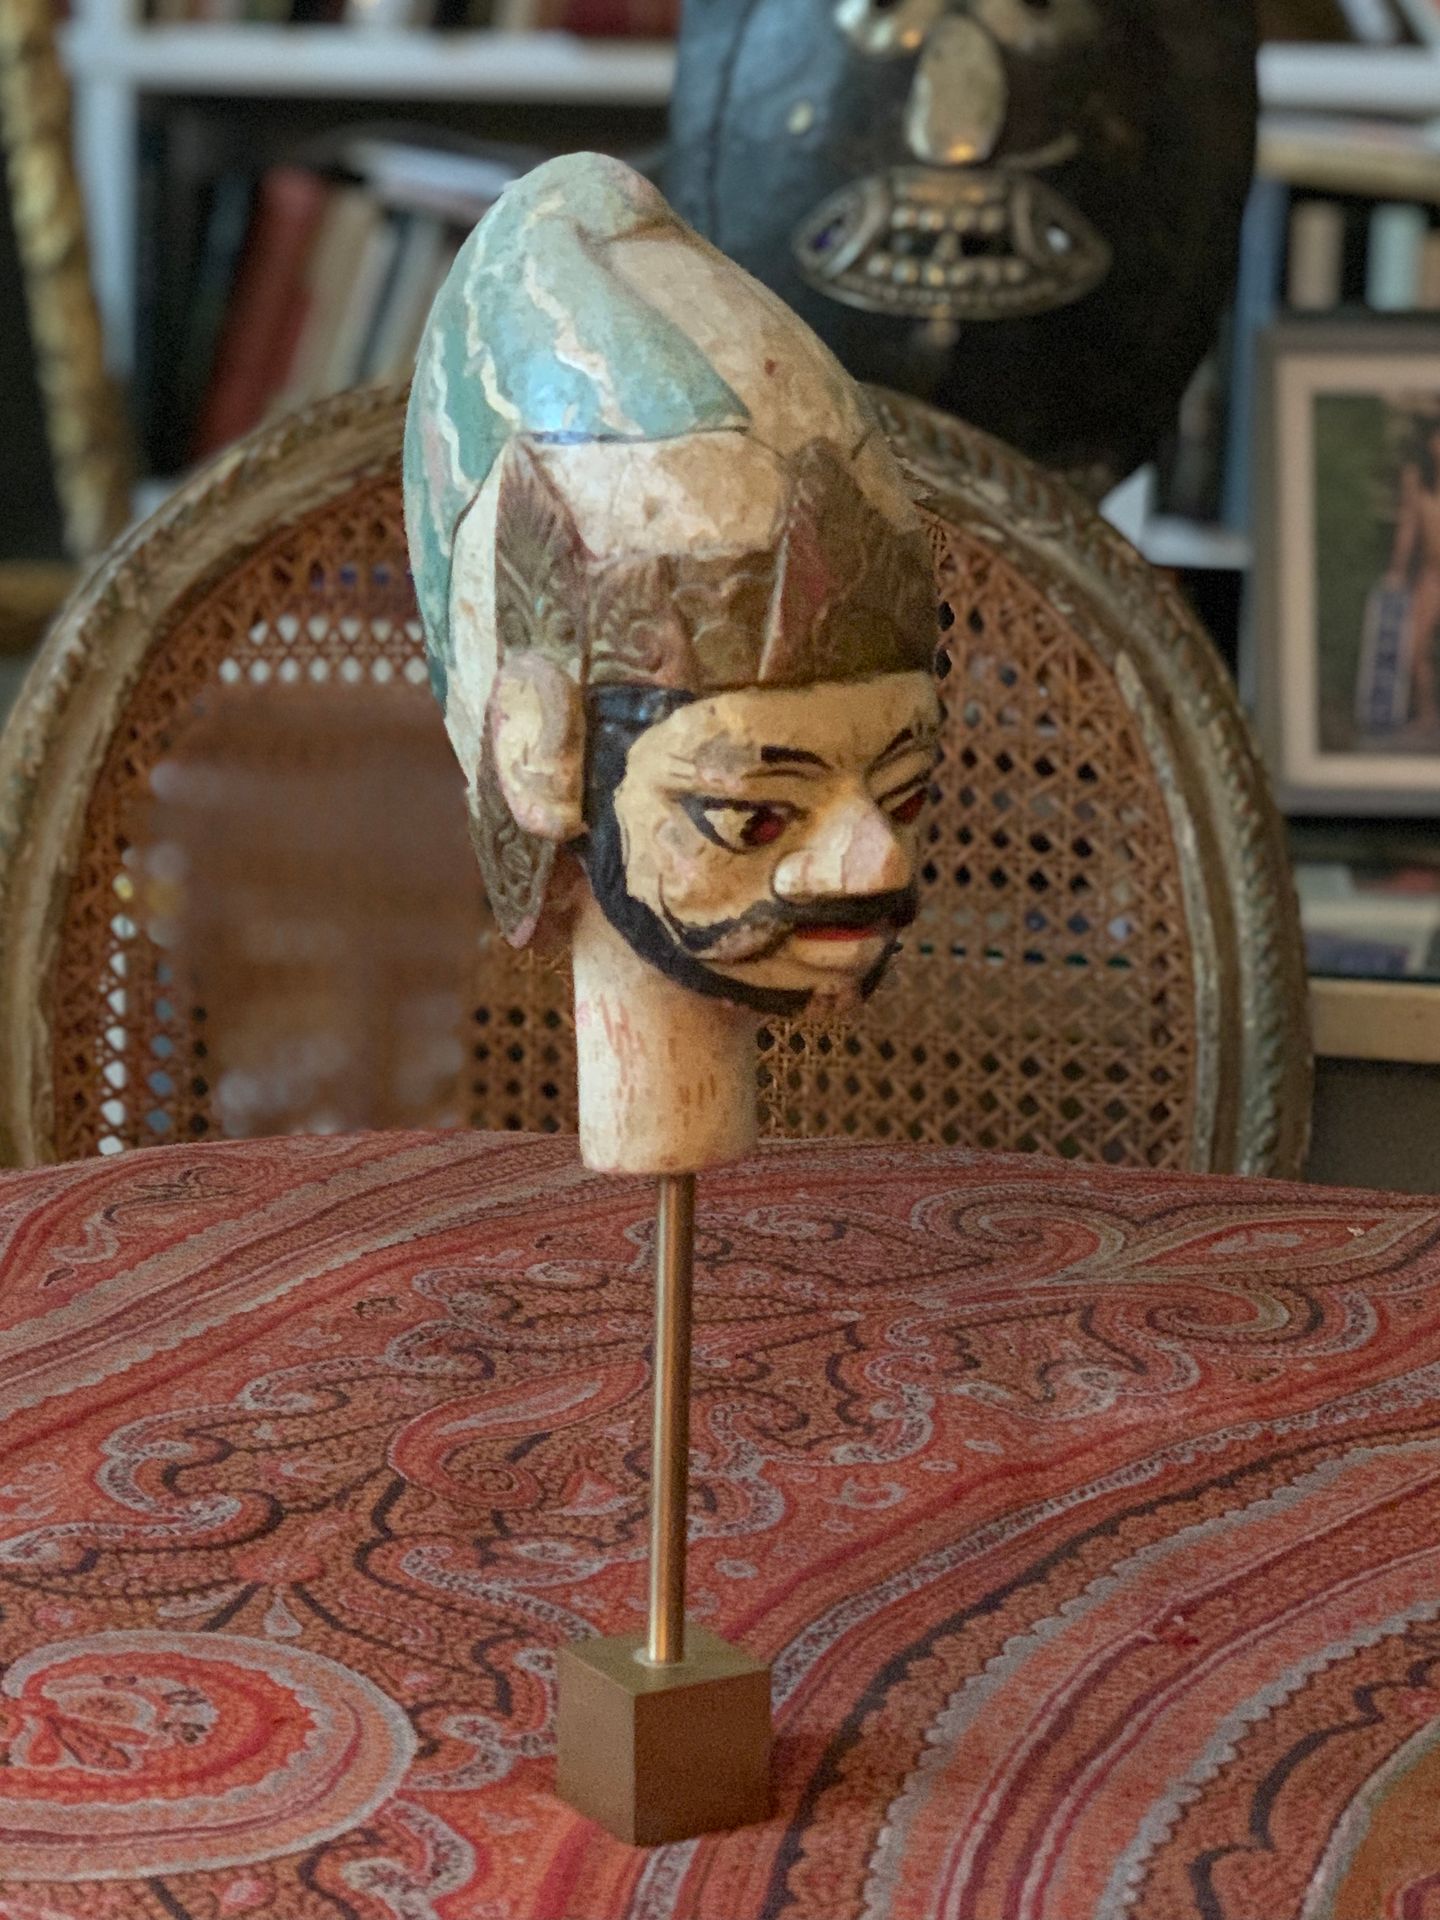 Null 多色木雕代表大胡子的木偶头

巴厘岛。

高度：15厘米